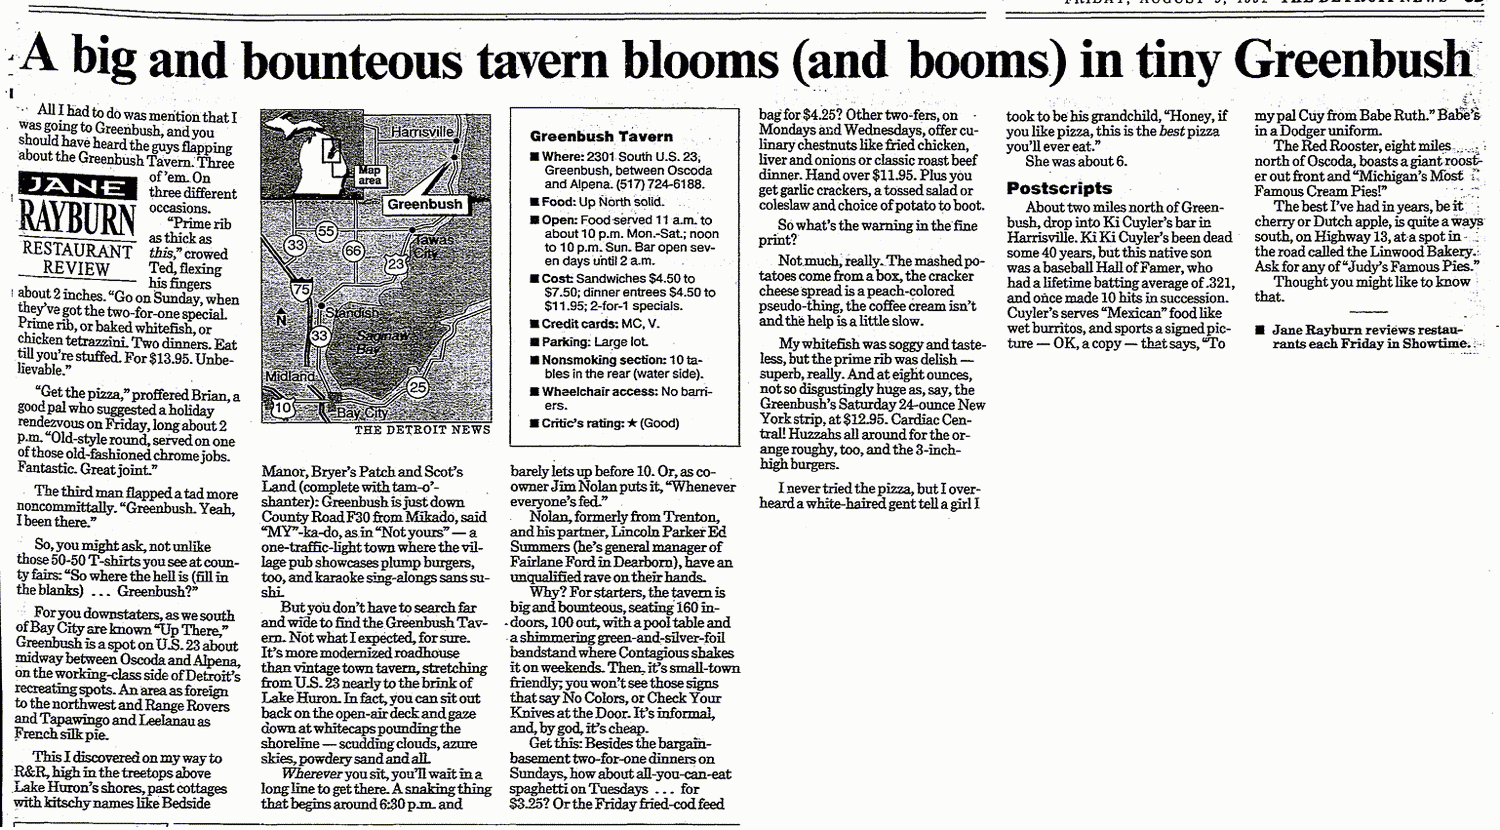 Greenbush Tavern - Aug 1991 Review